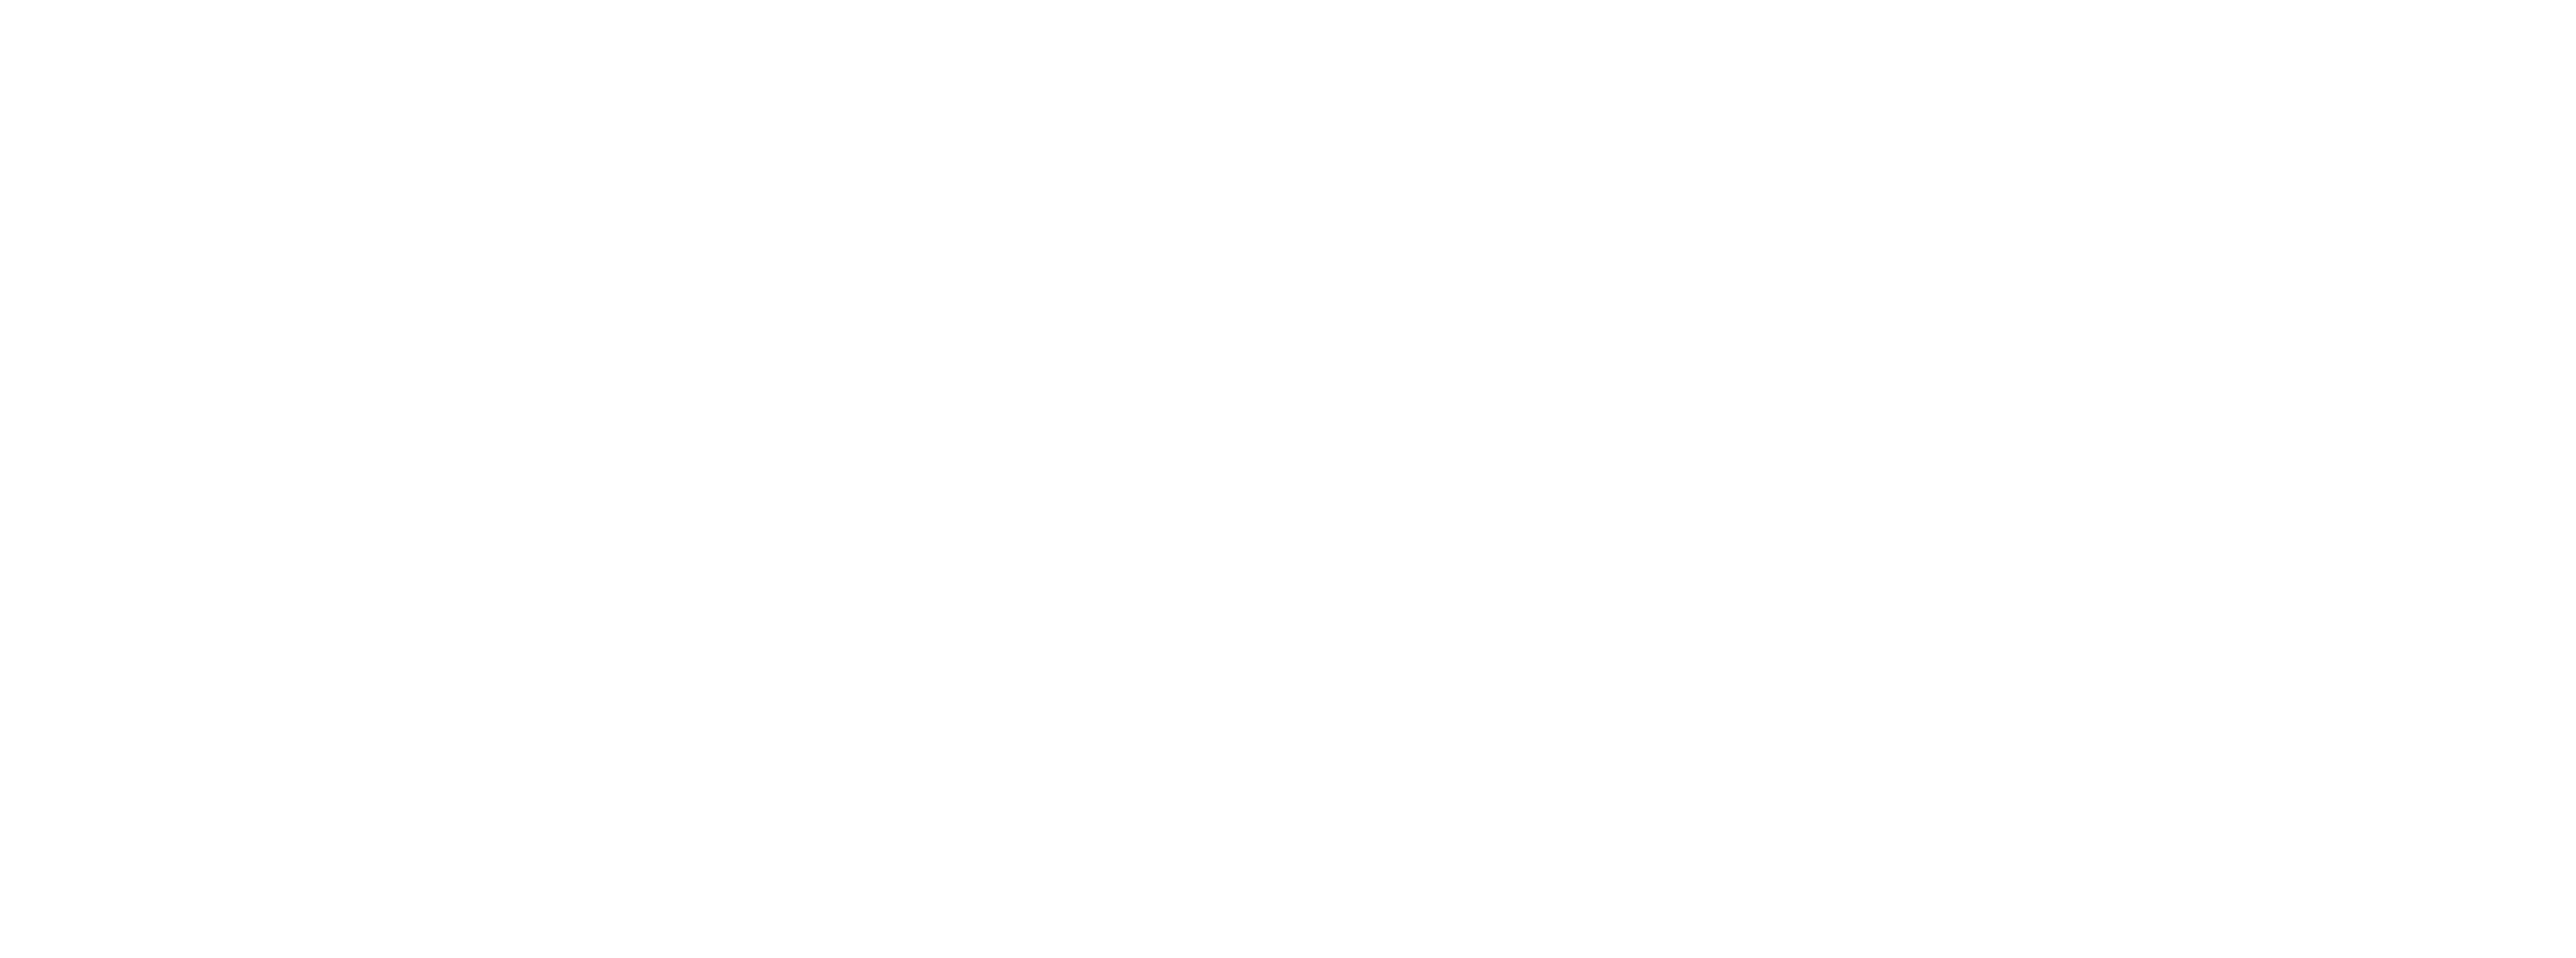 Kraków Miasto Literatury UNESCO - 